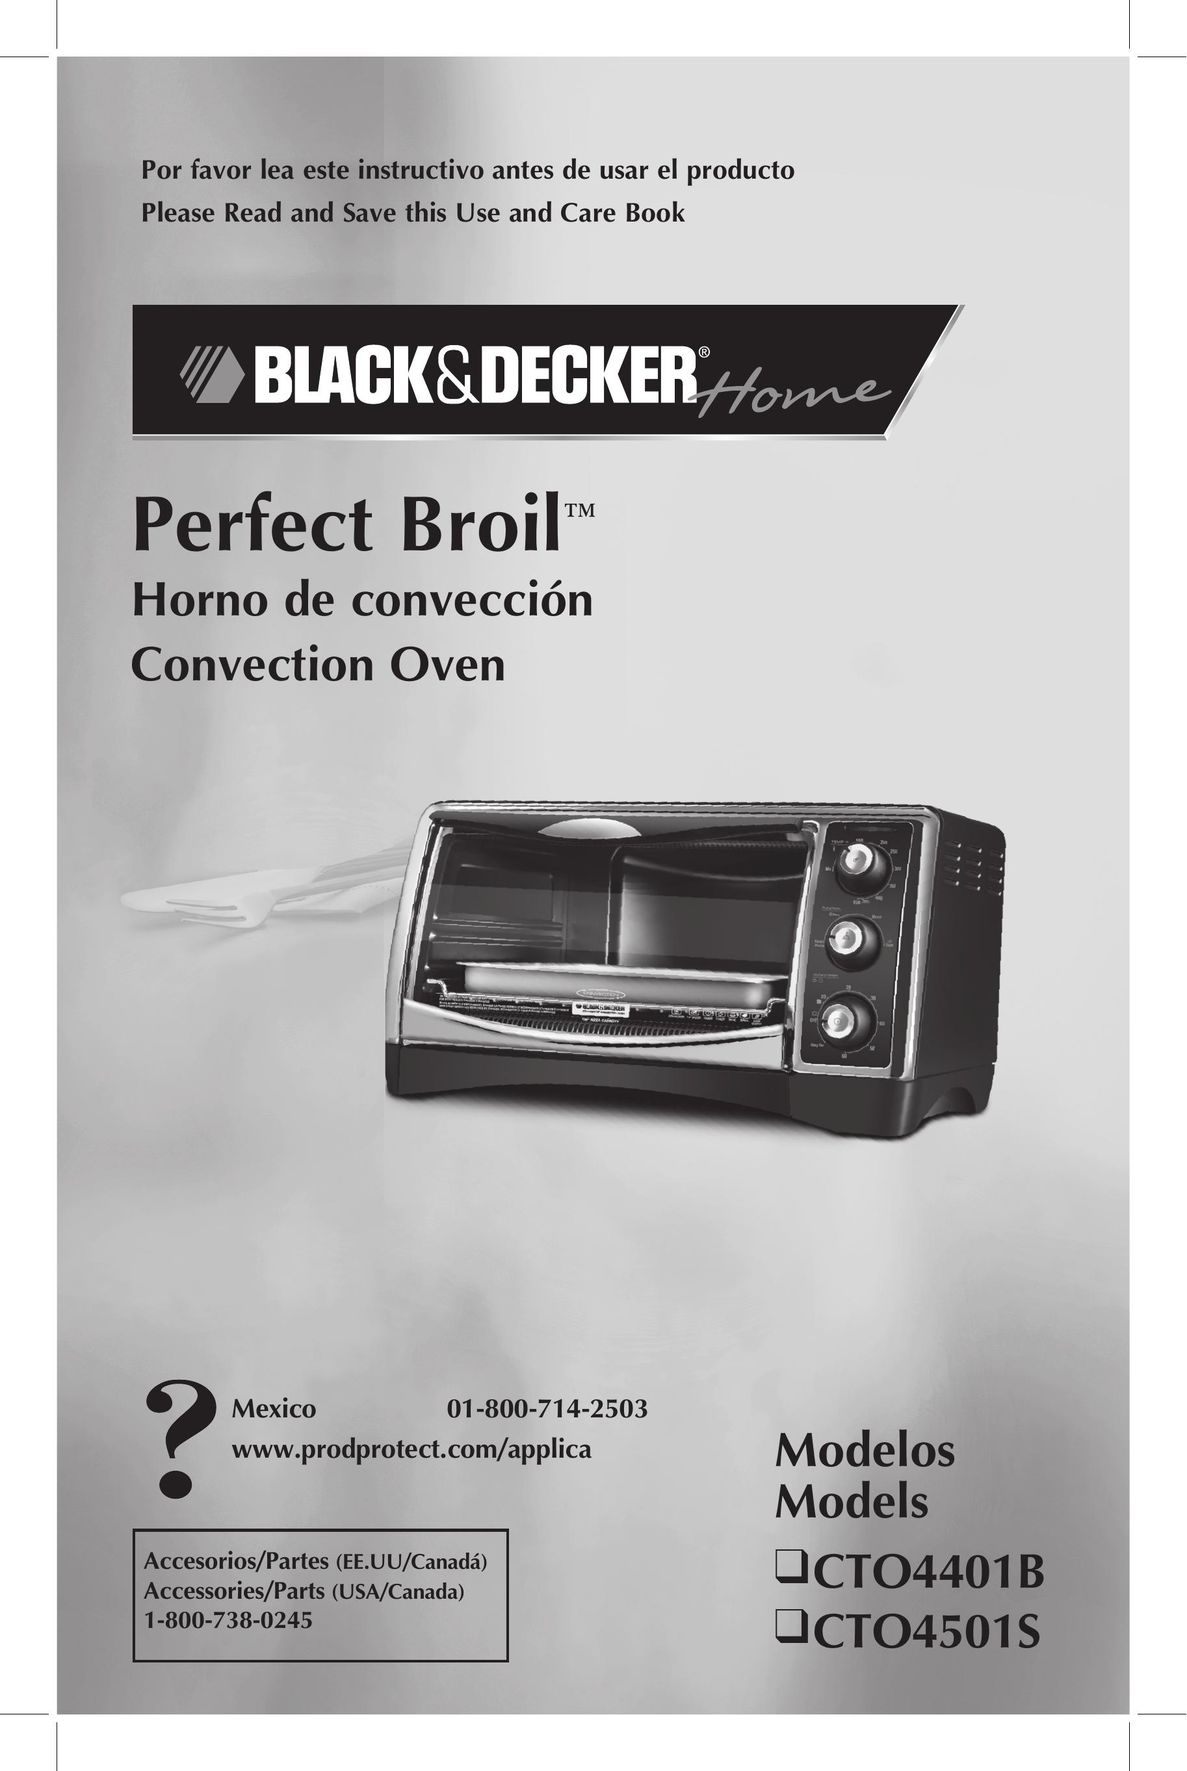 Black & Decker CTO4501S Convection Oven User Manual